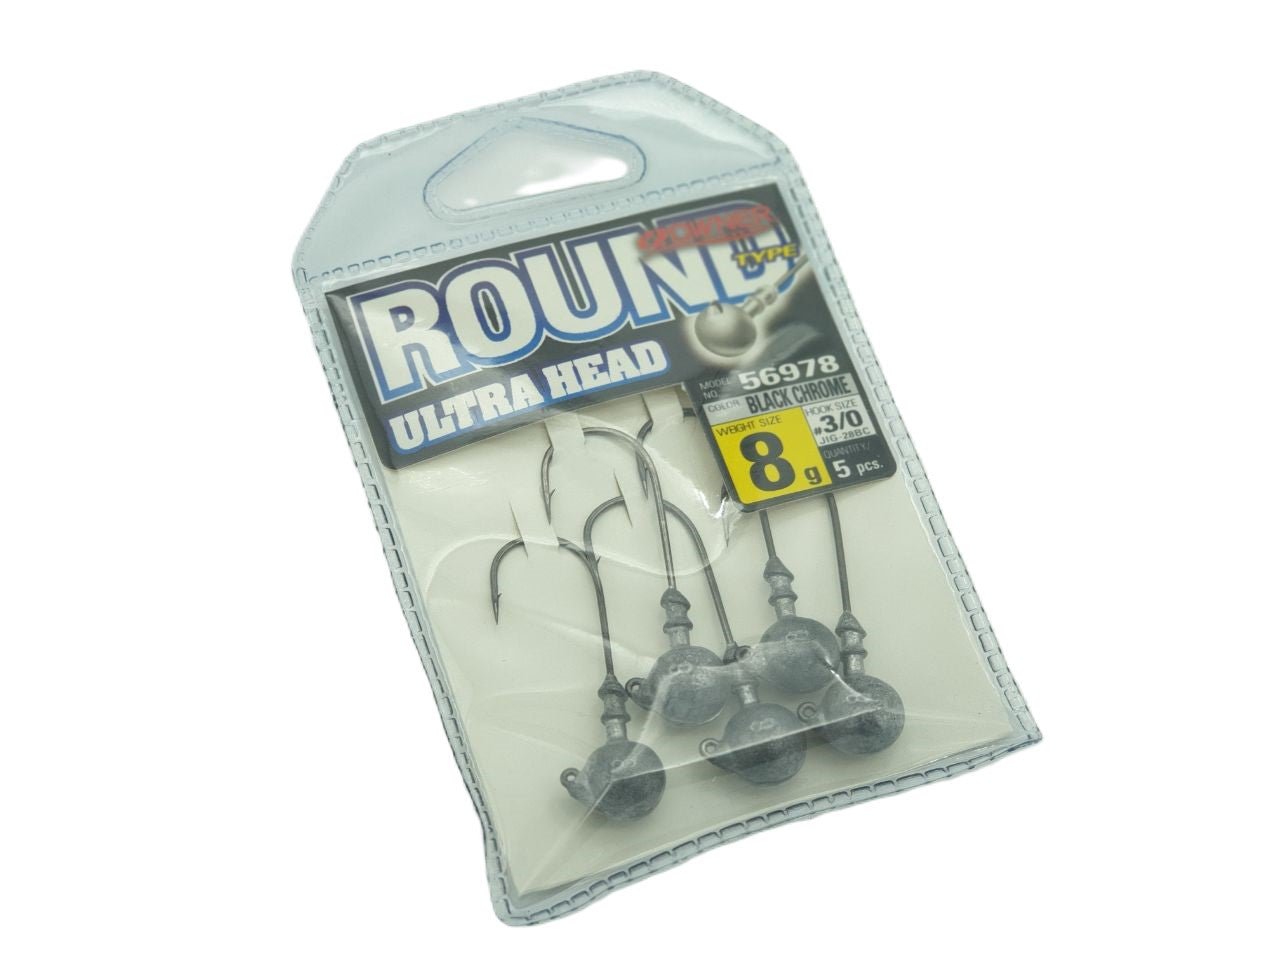 Owner Round Type Ultra Head Jig Heads | 56978 | Black Chrome | 3 - 5 Pcs Per Pack | - Fishermanshub#2/015Gm